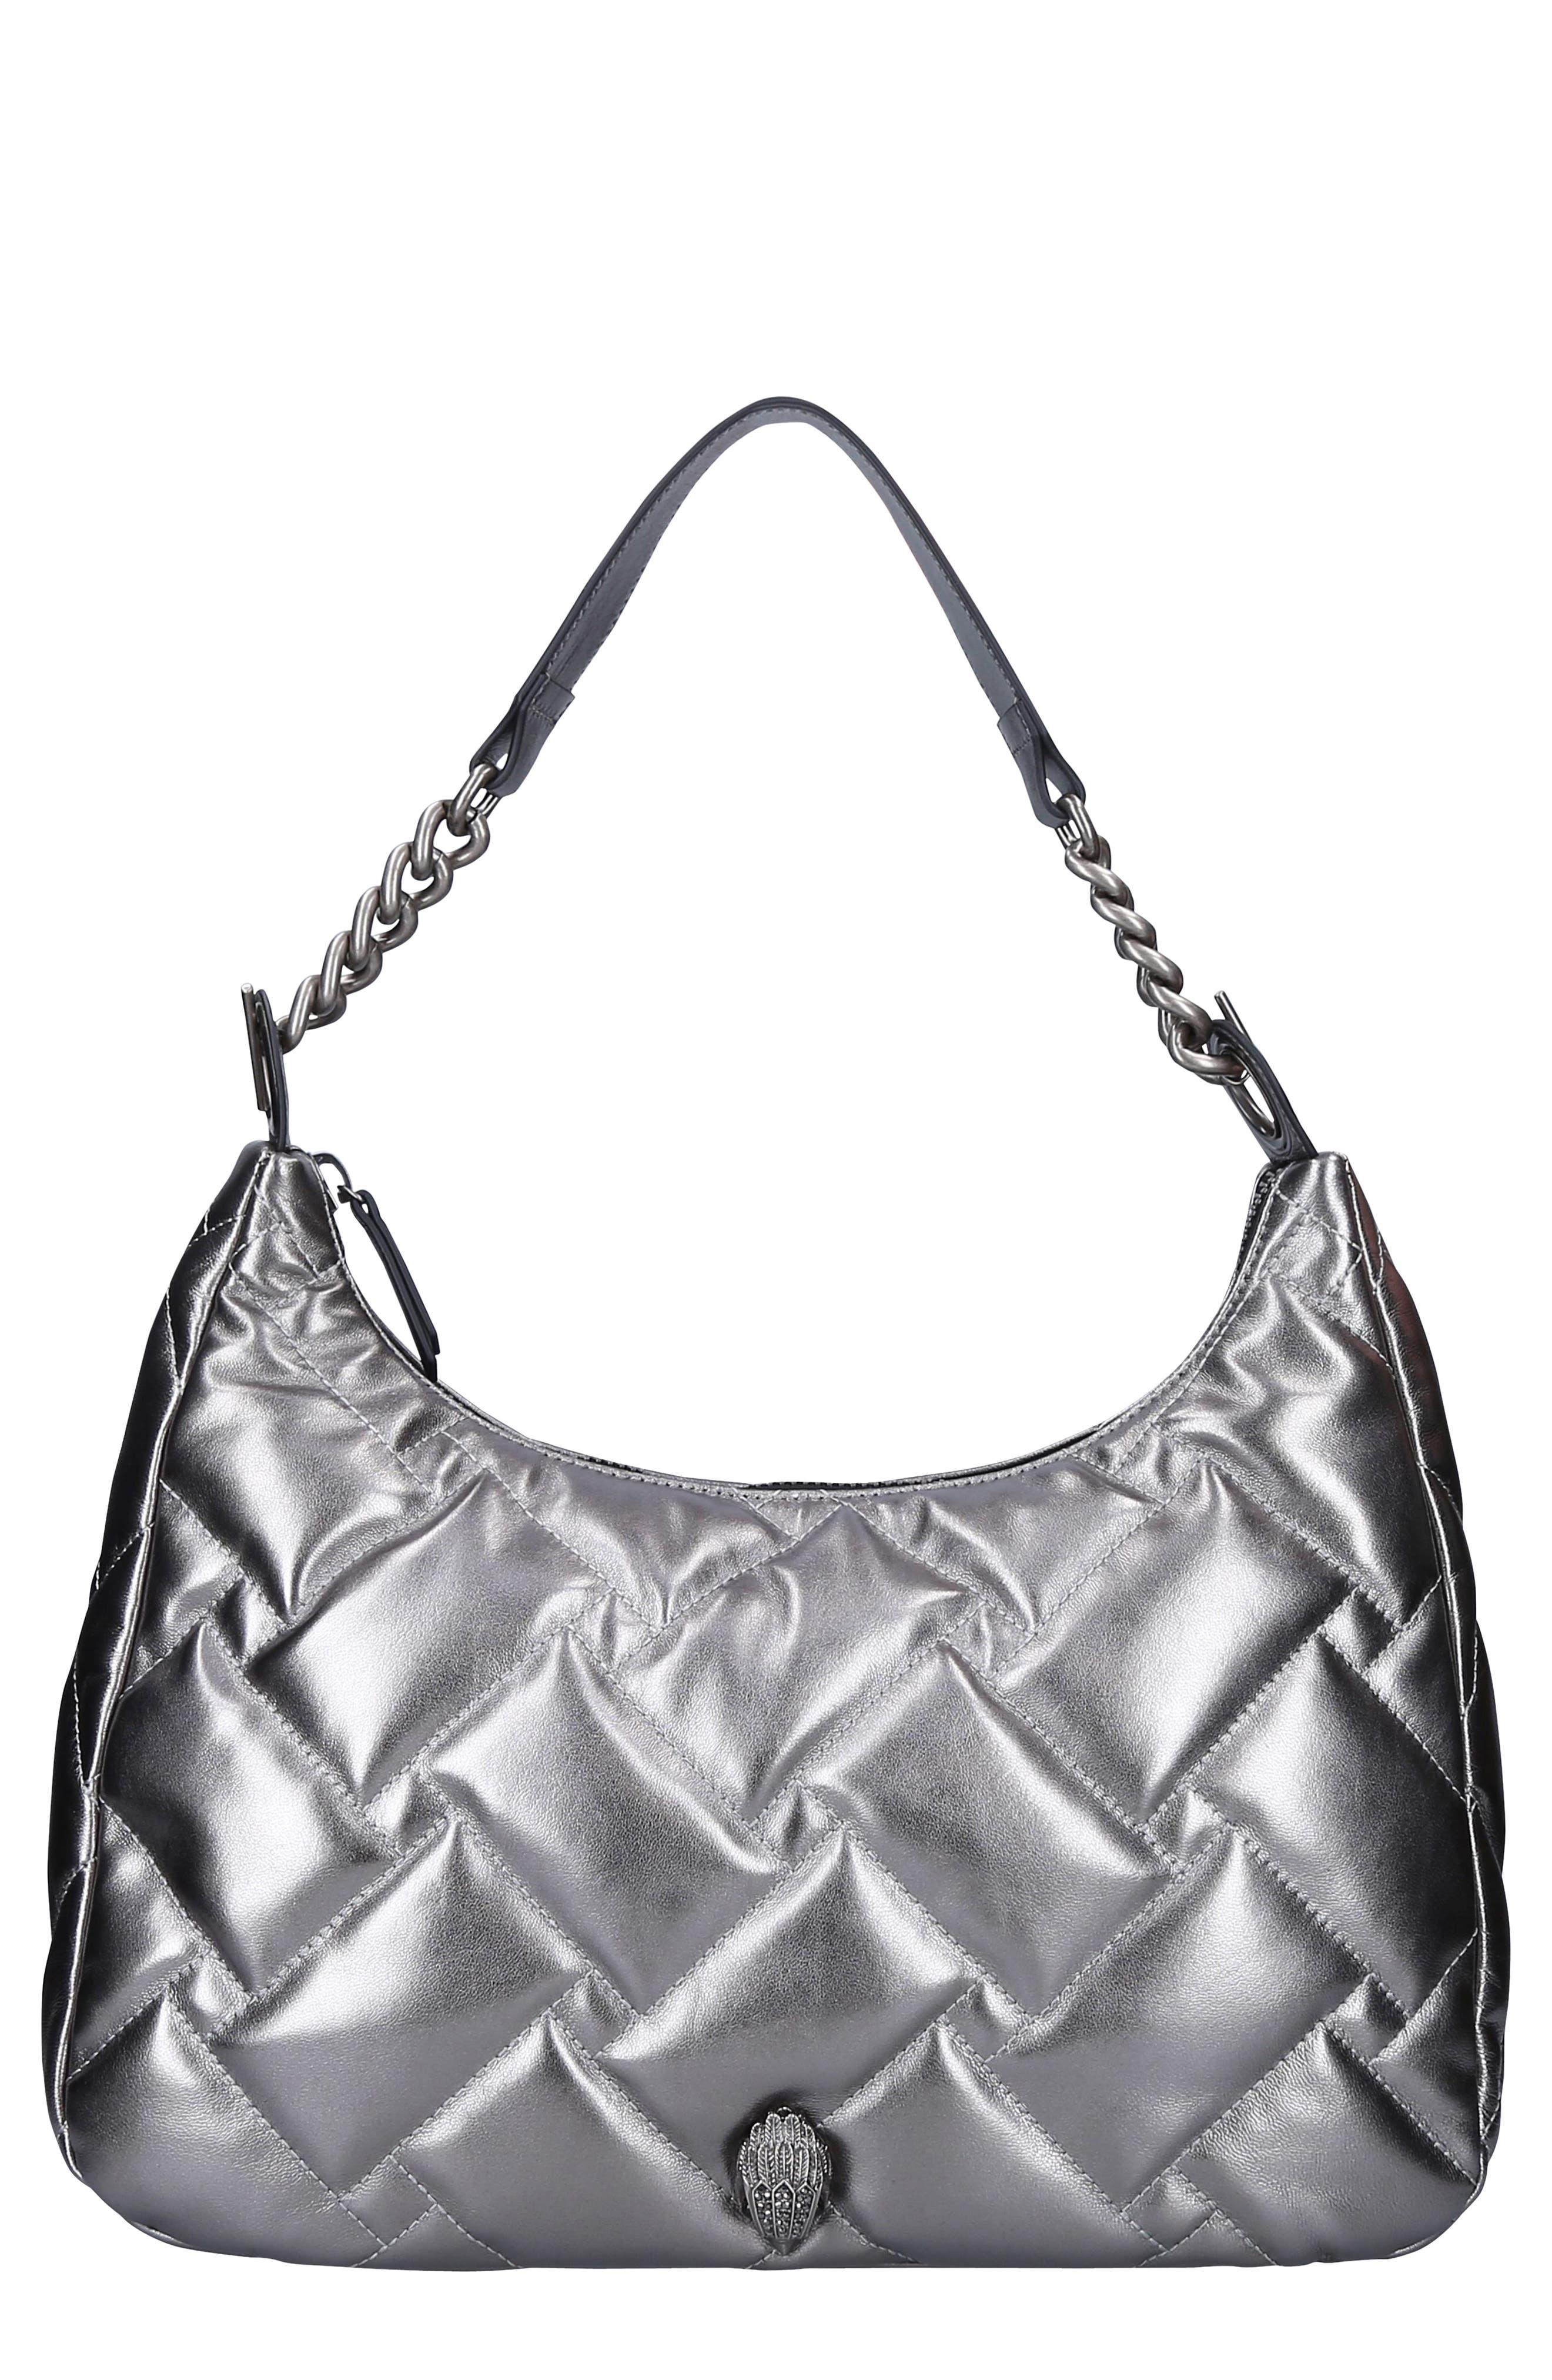 Kurt Geiger Kensington Large Leather Hobo Bag In Silver At Nordstrom Rack  in Metallic | Lyst